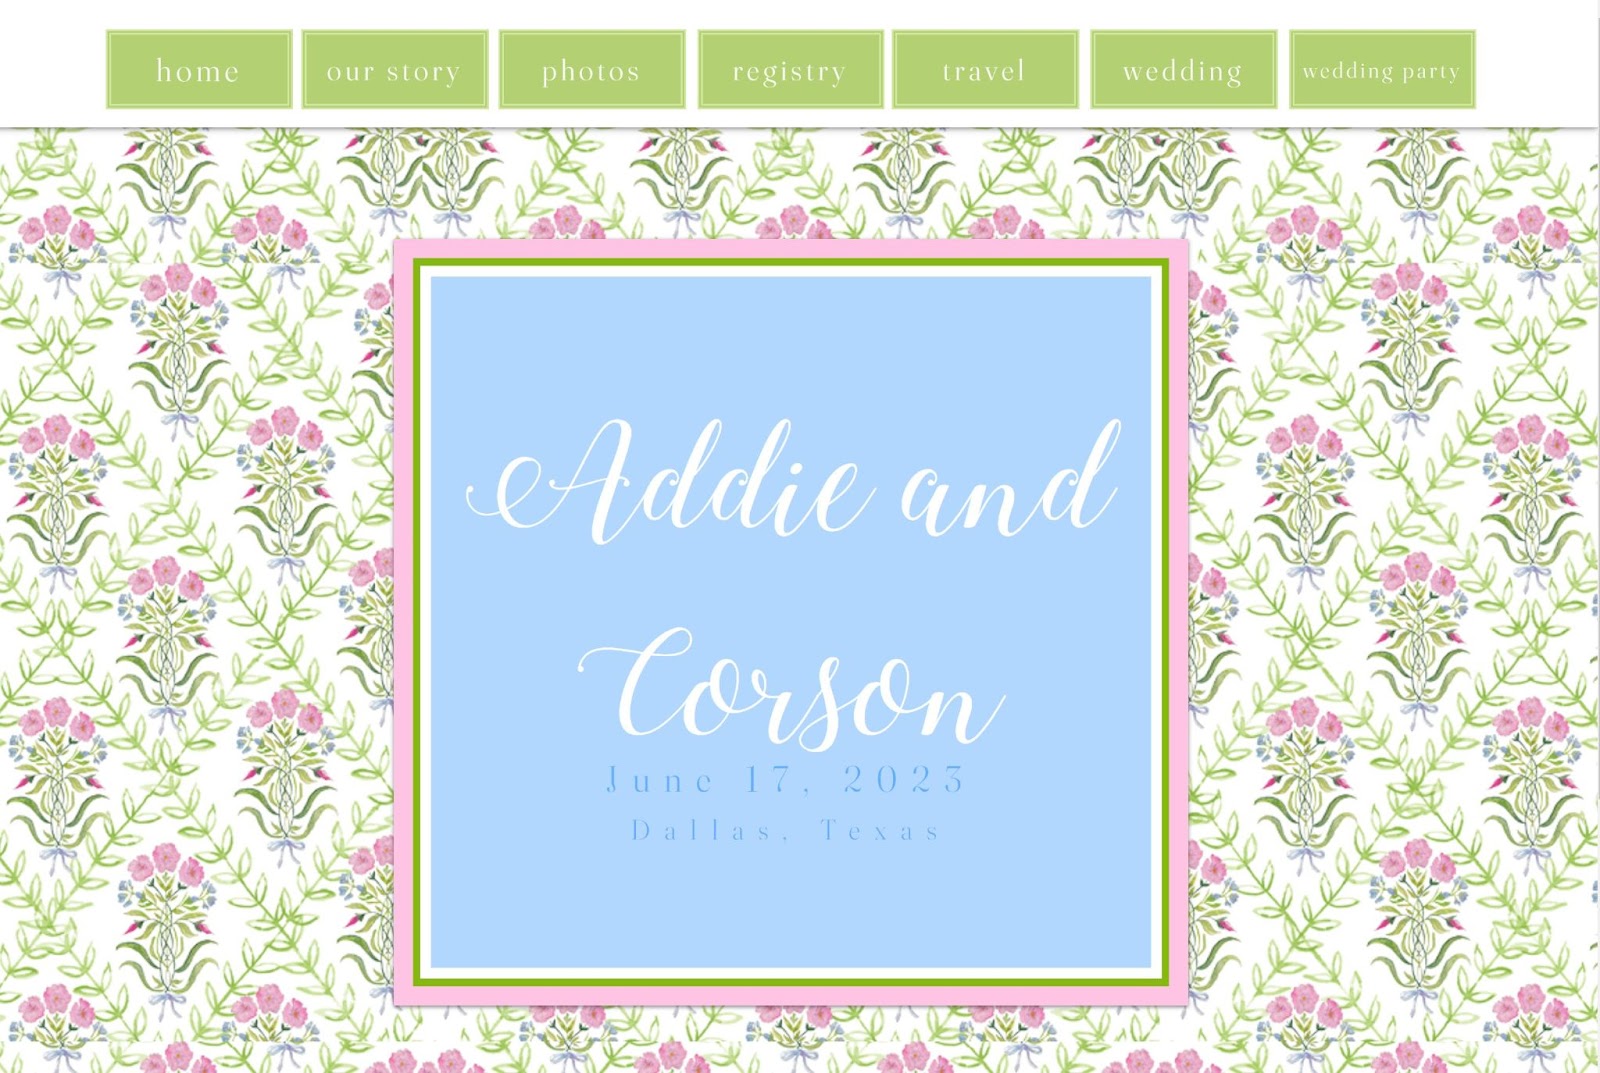 Addie and Corson wedding website homepage